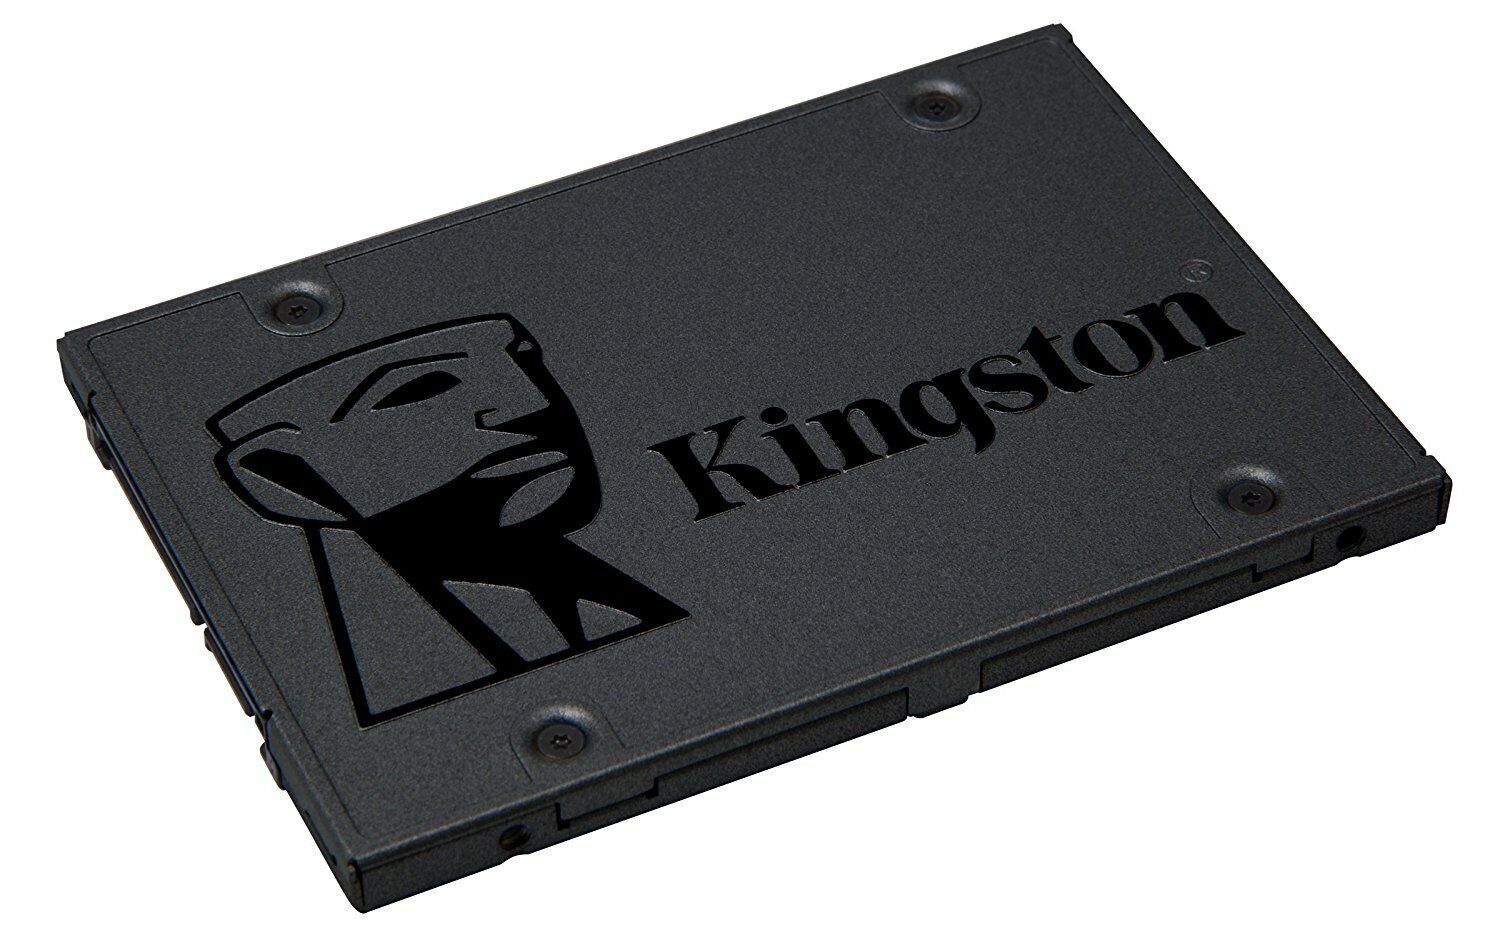 Kingston A400 SSD 240GB SATA 3 2.5” Solid State Drive SA400S37/240G - Increas